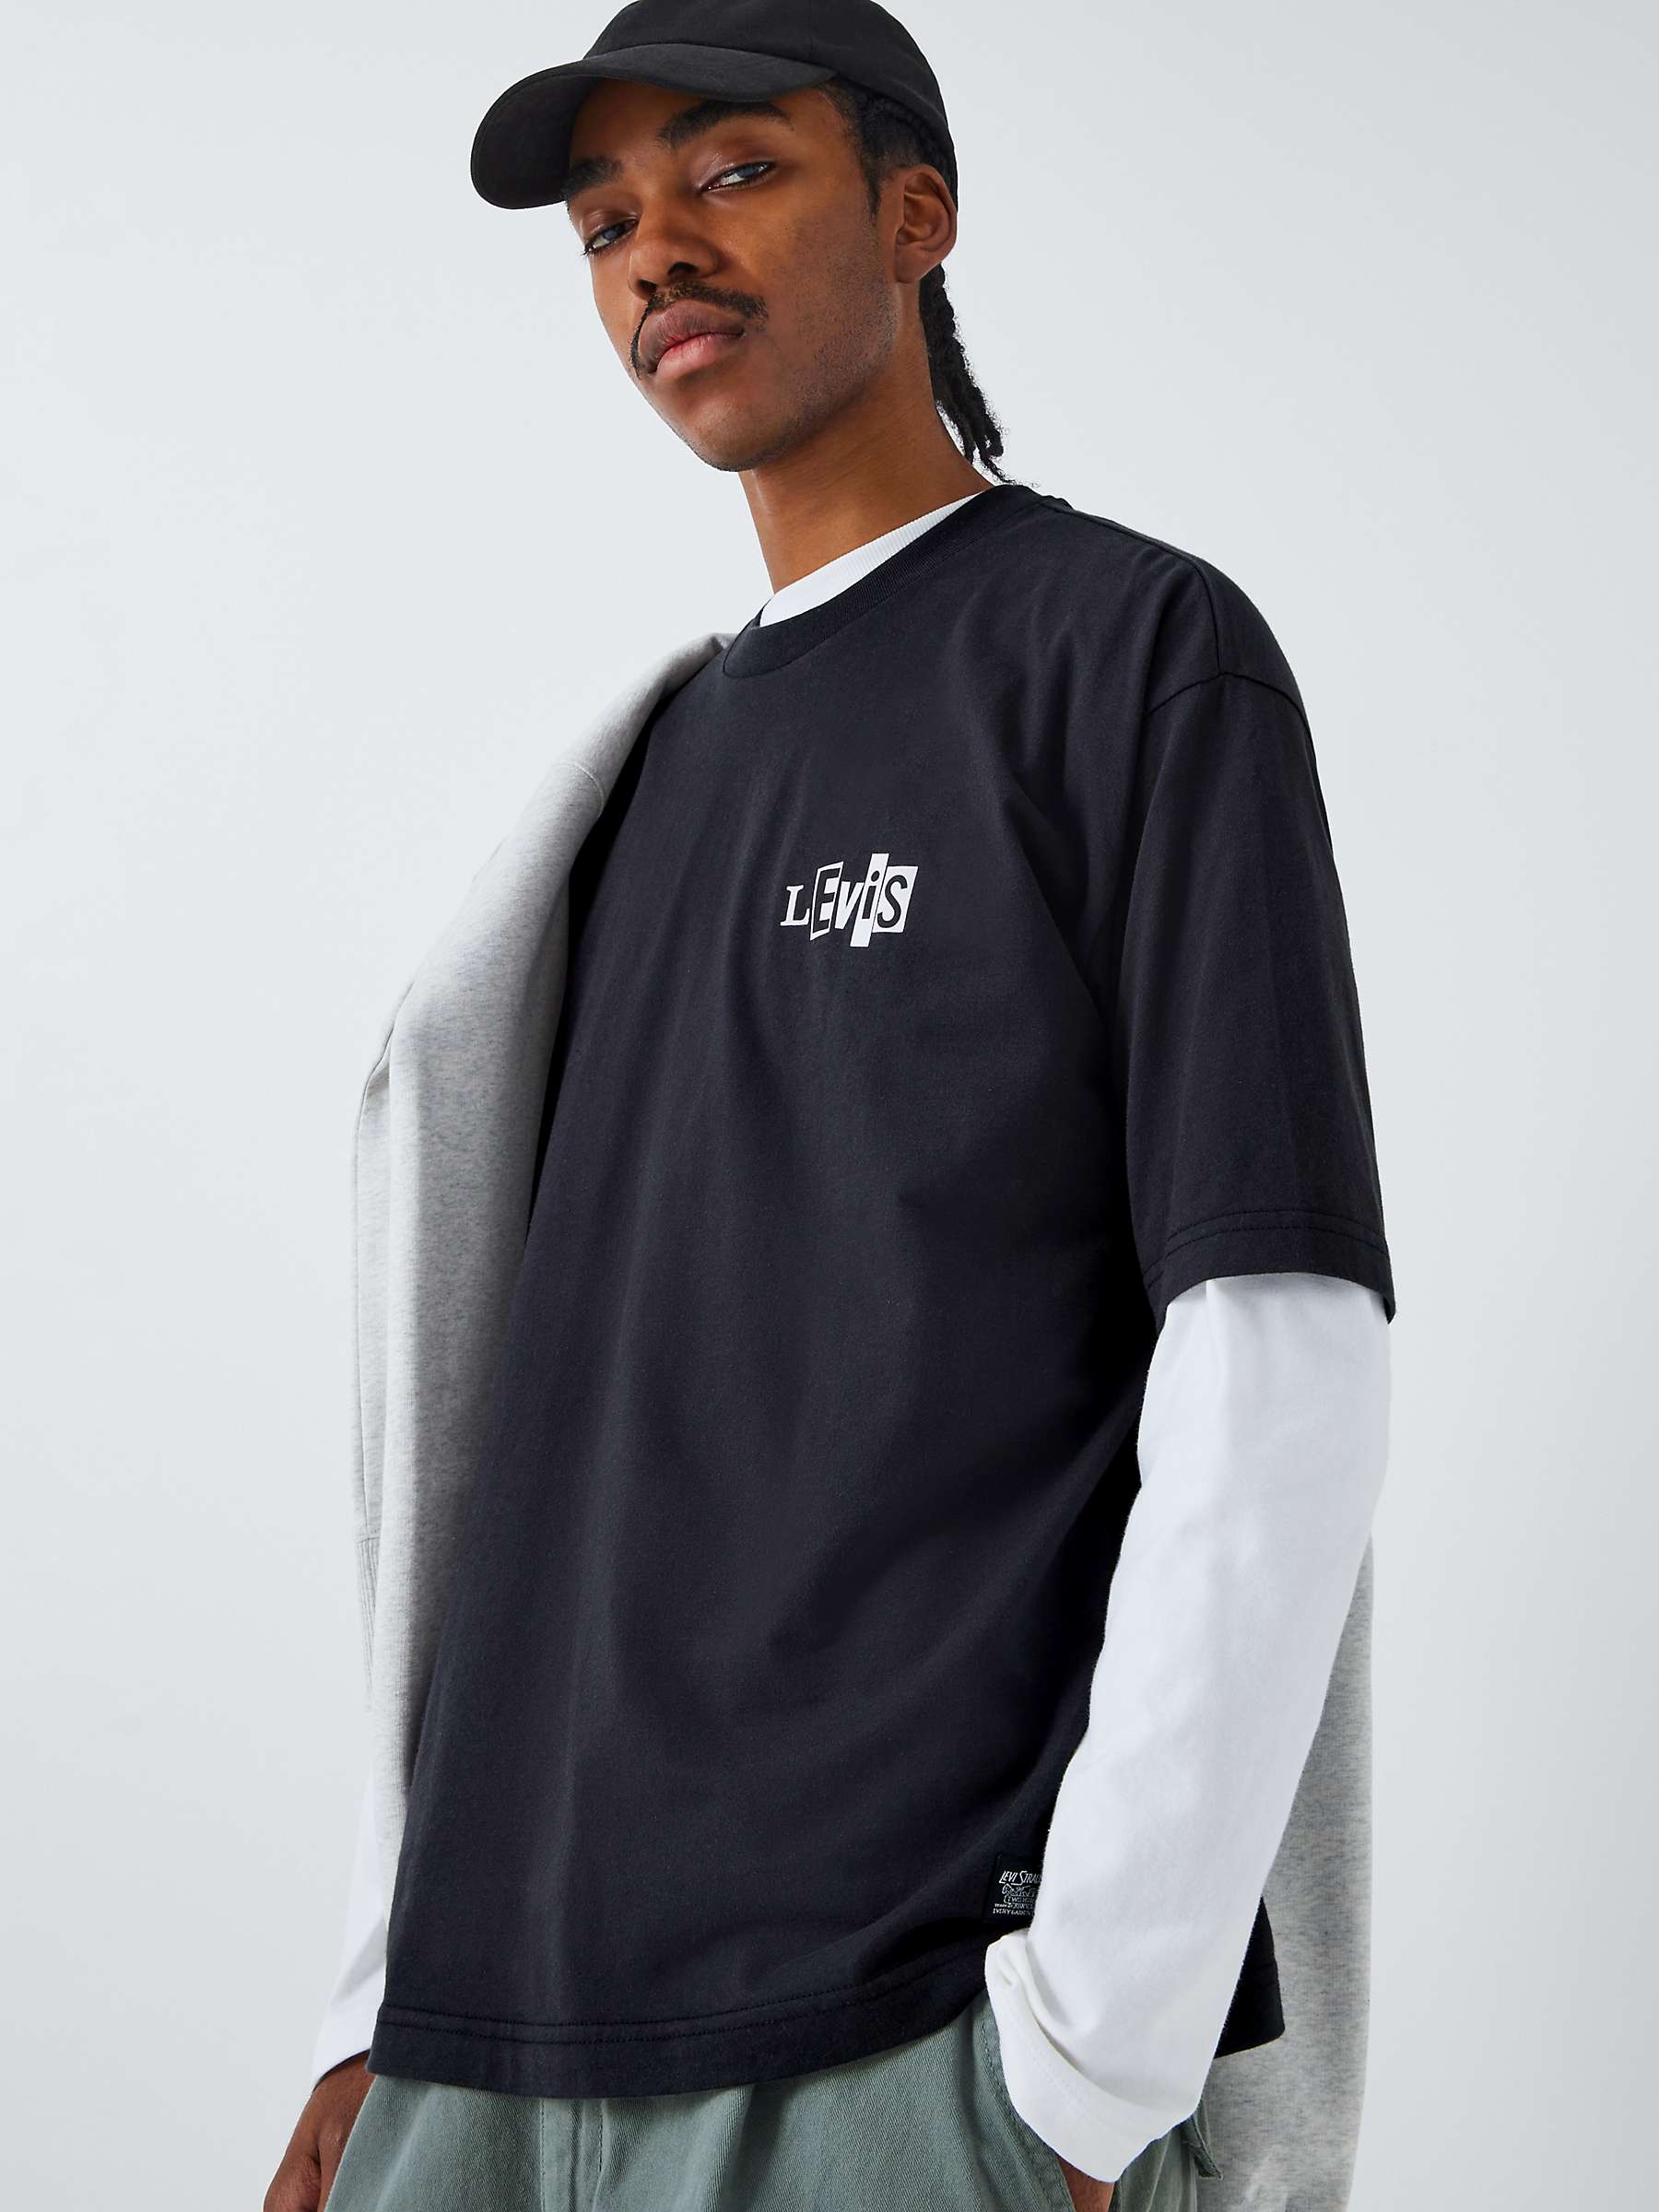 Buy Levi's Skate Graph T-Shirt Online at johnlewis.com